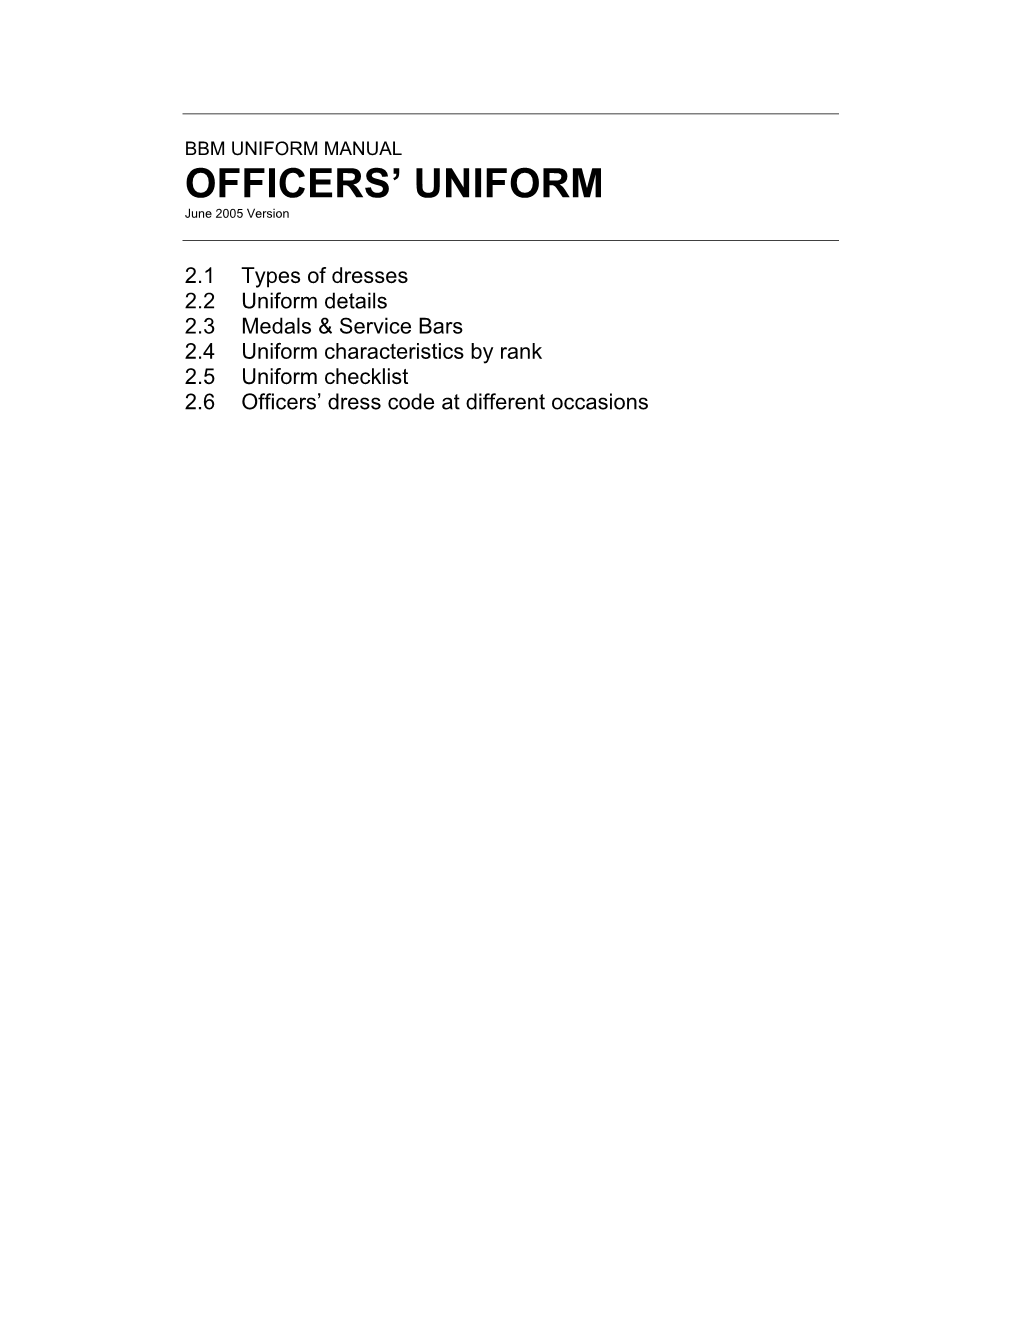 Officers' Uniform